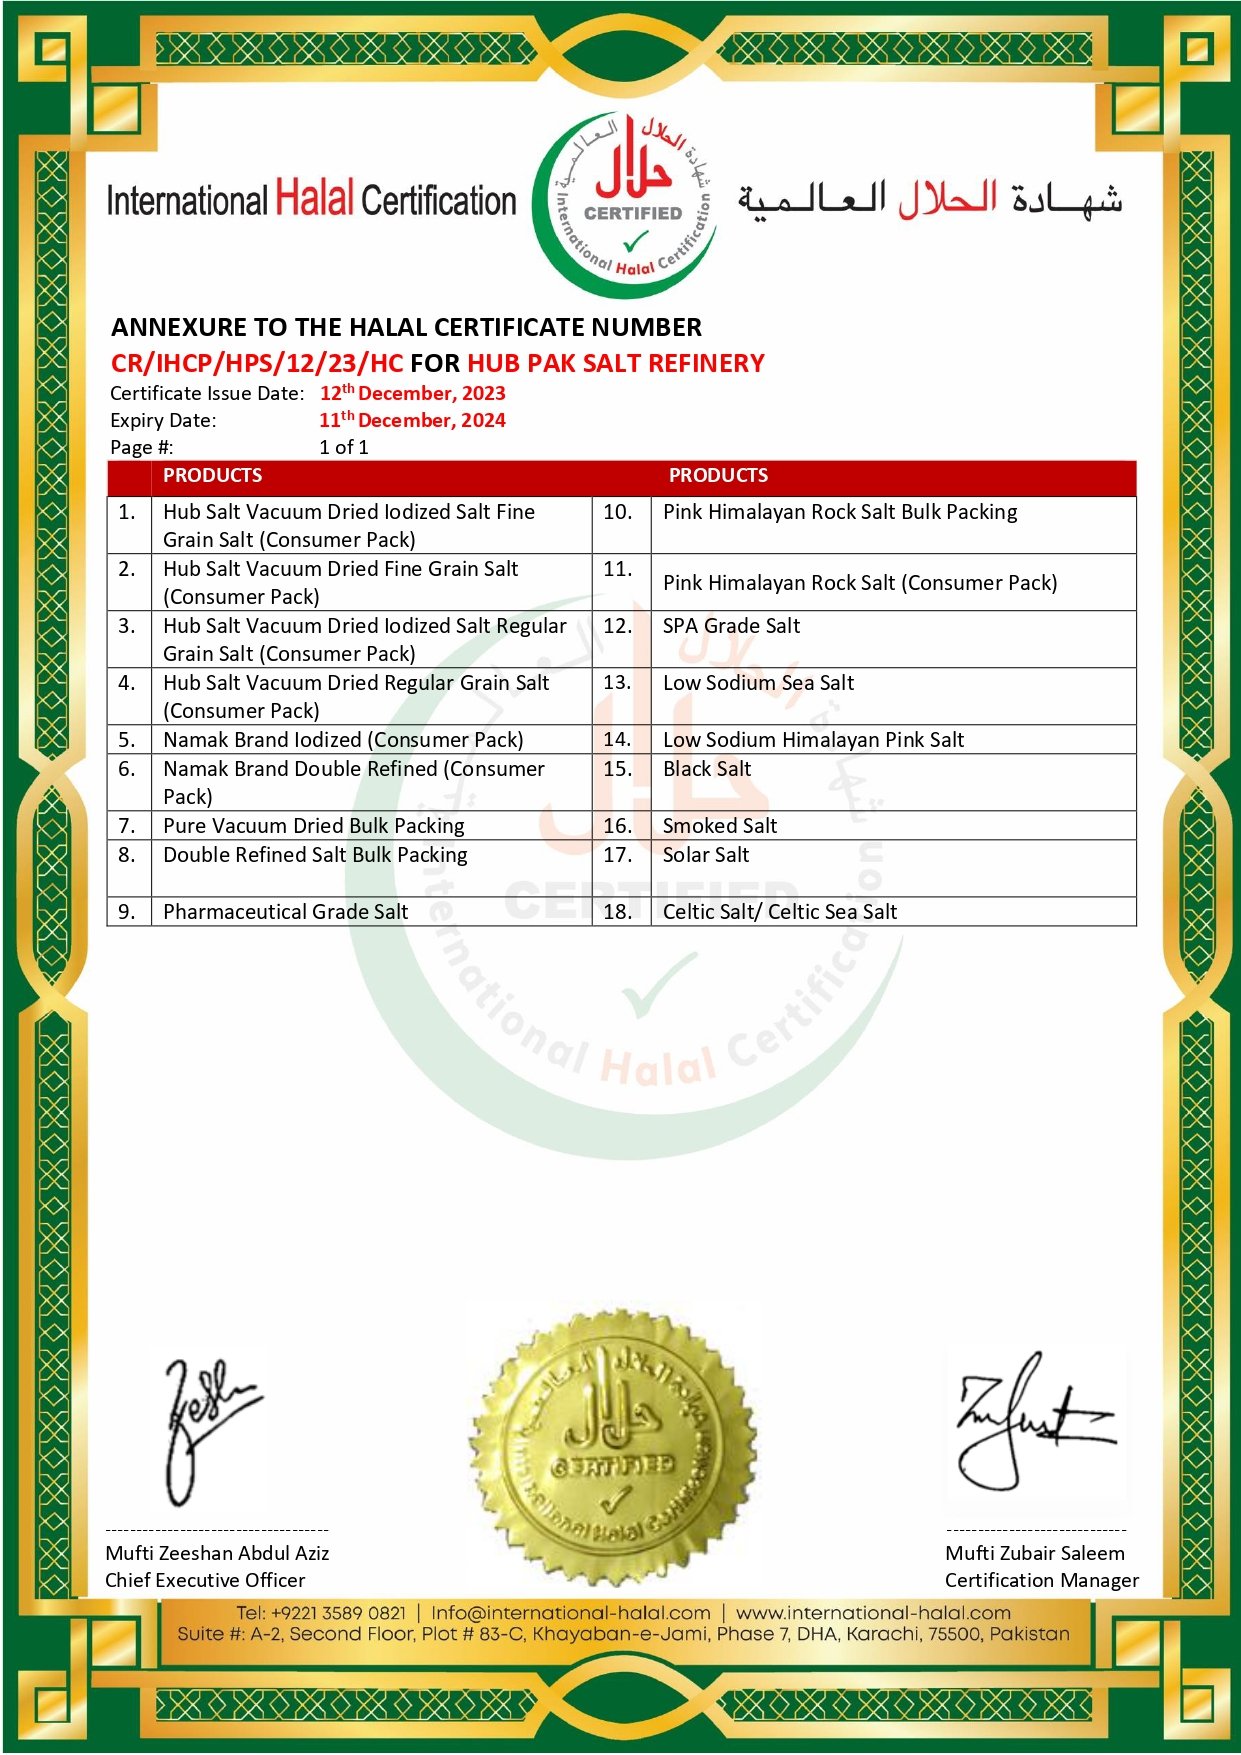 IHC Halal Certificate Annexure -HUB PAK SALT REFINERY-2023-2024_page-0001